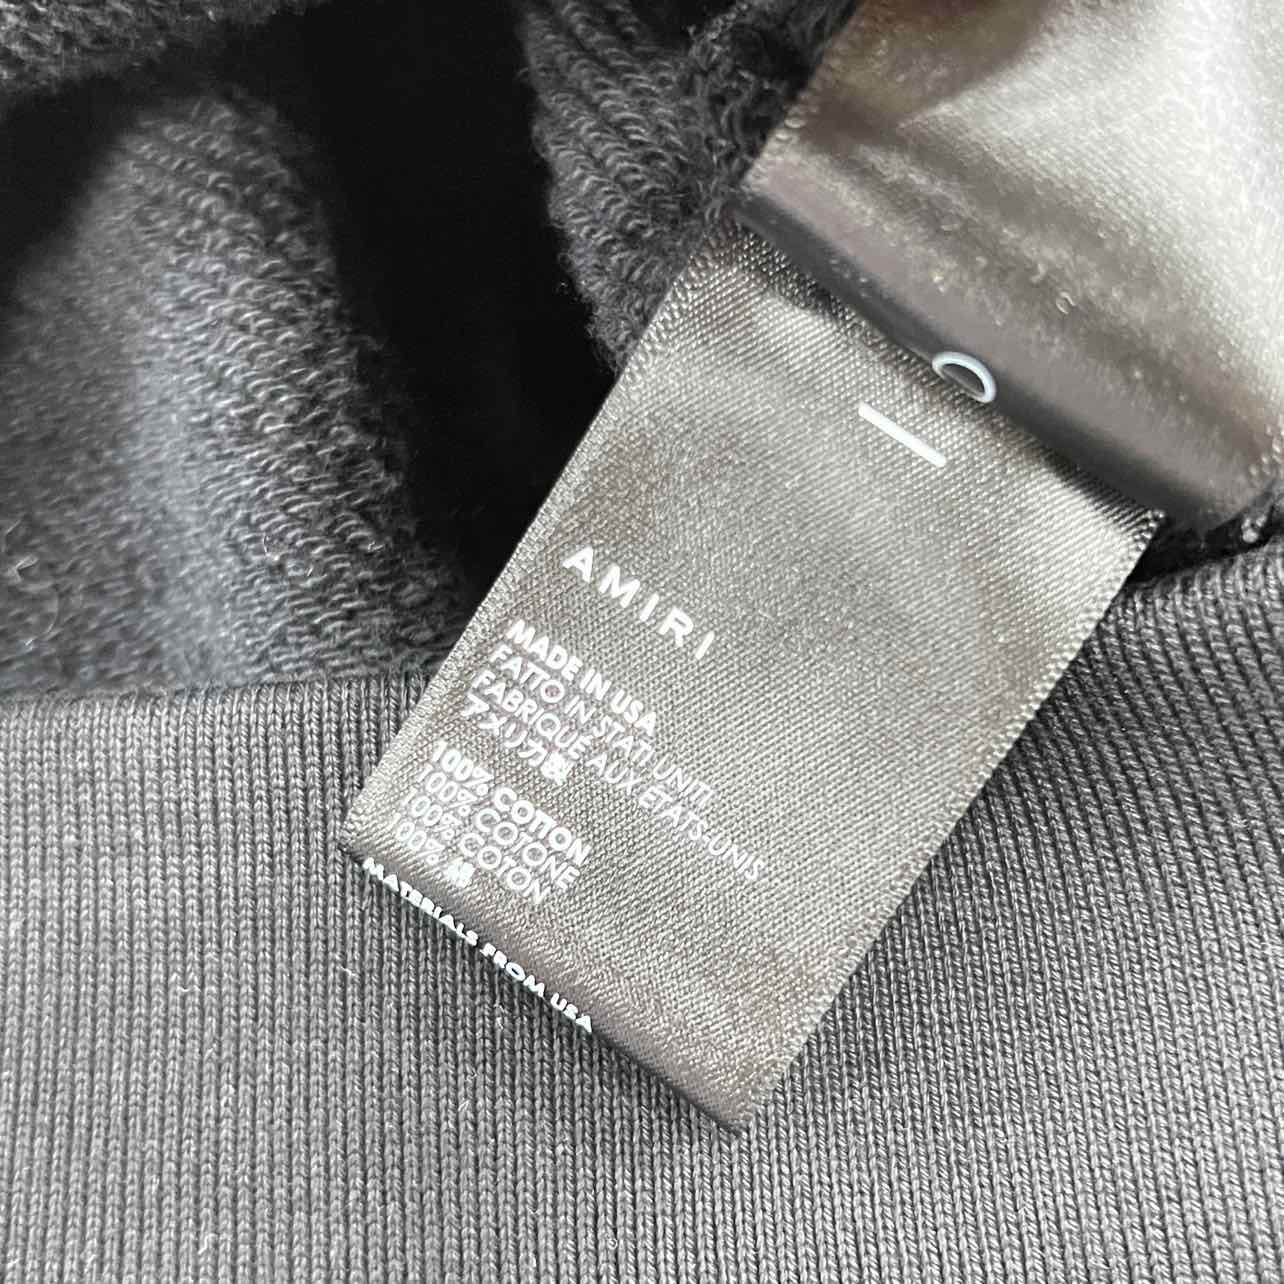 Amiri Crewneck Sweater &quot;PLAYBOY&quot; Black Used Size L